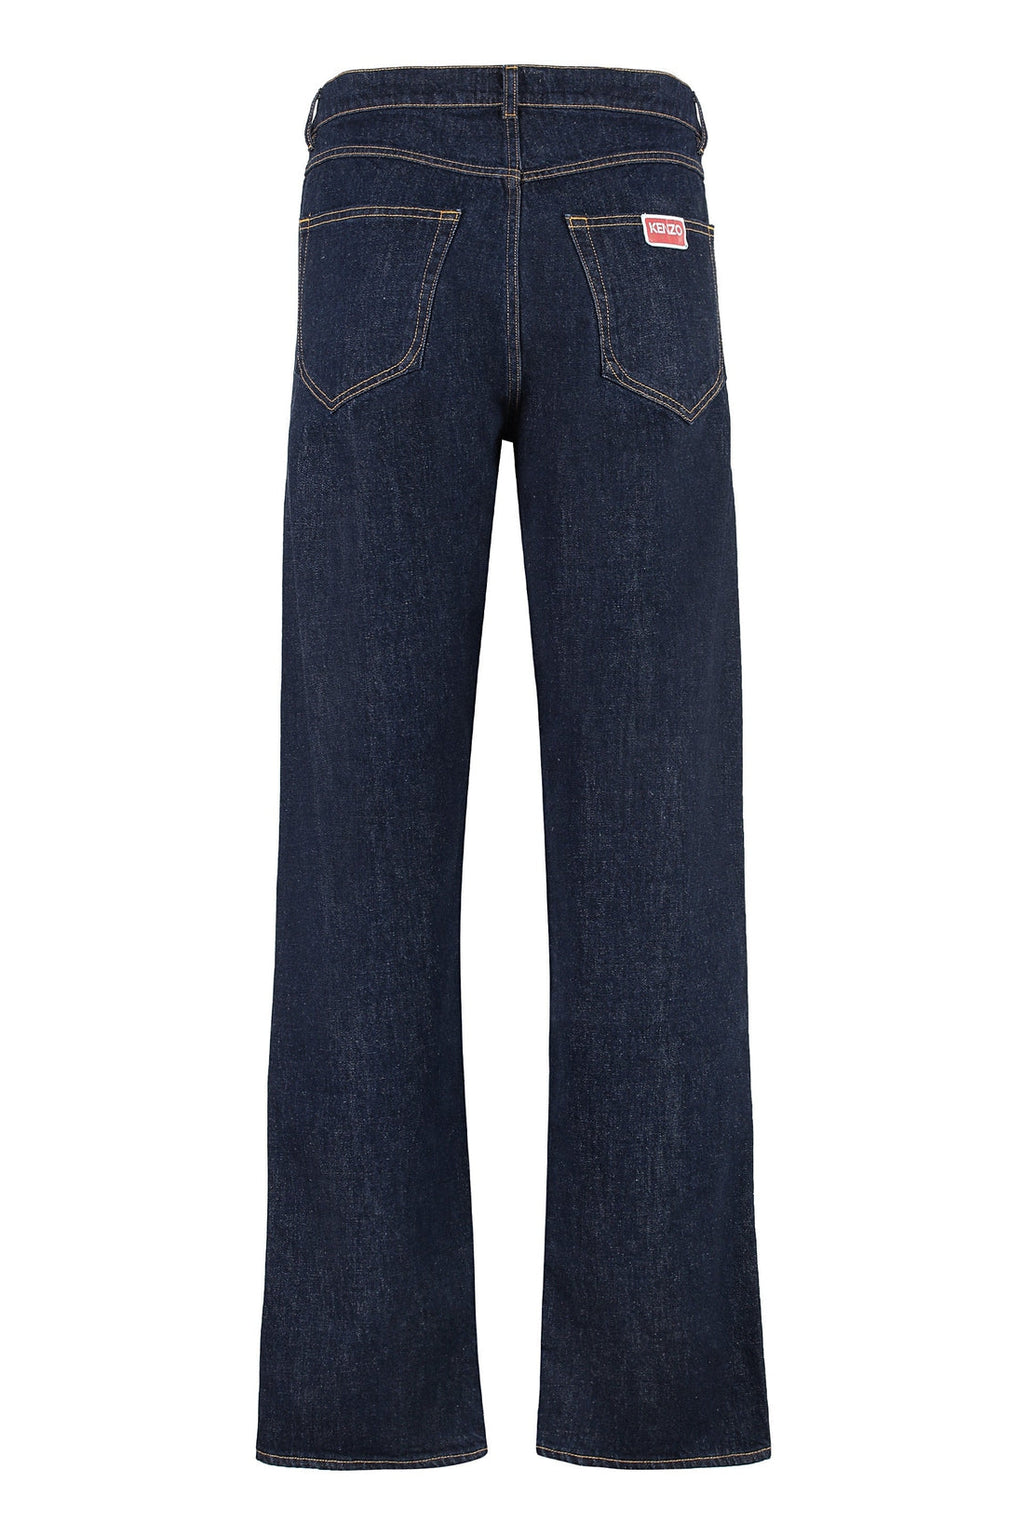 Kenzo-OUTLET-SALE-ASAGAO 5-pocket straight-leg jeans-ARCHIVIST